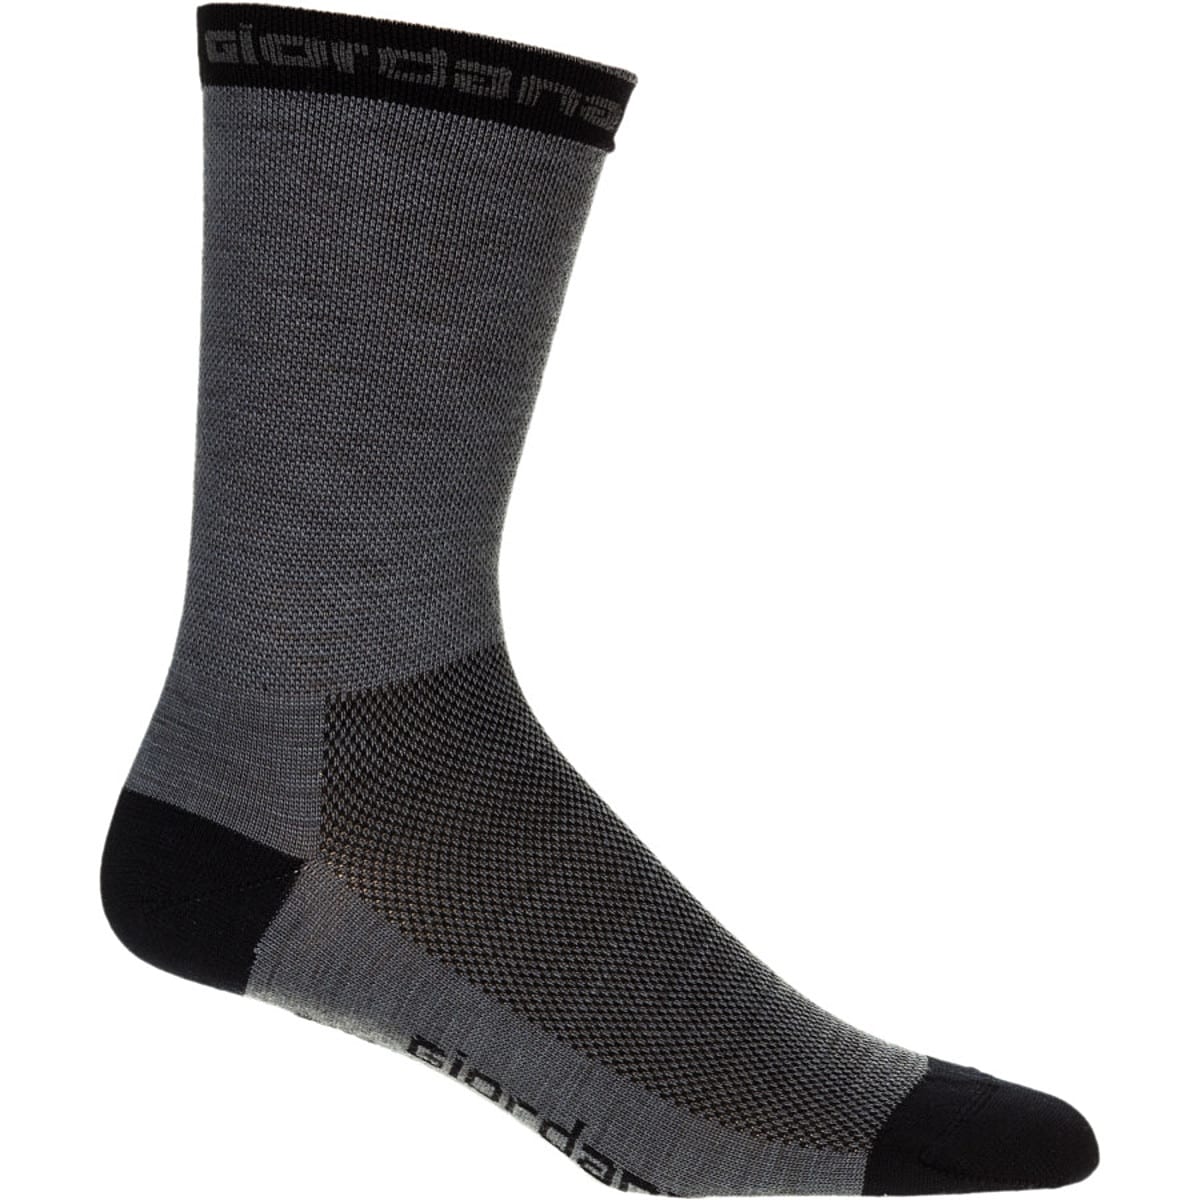 Giordana Merino Wool Tall Socks Men's